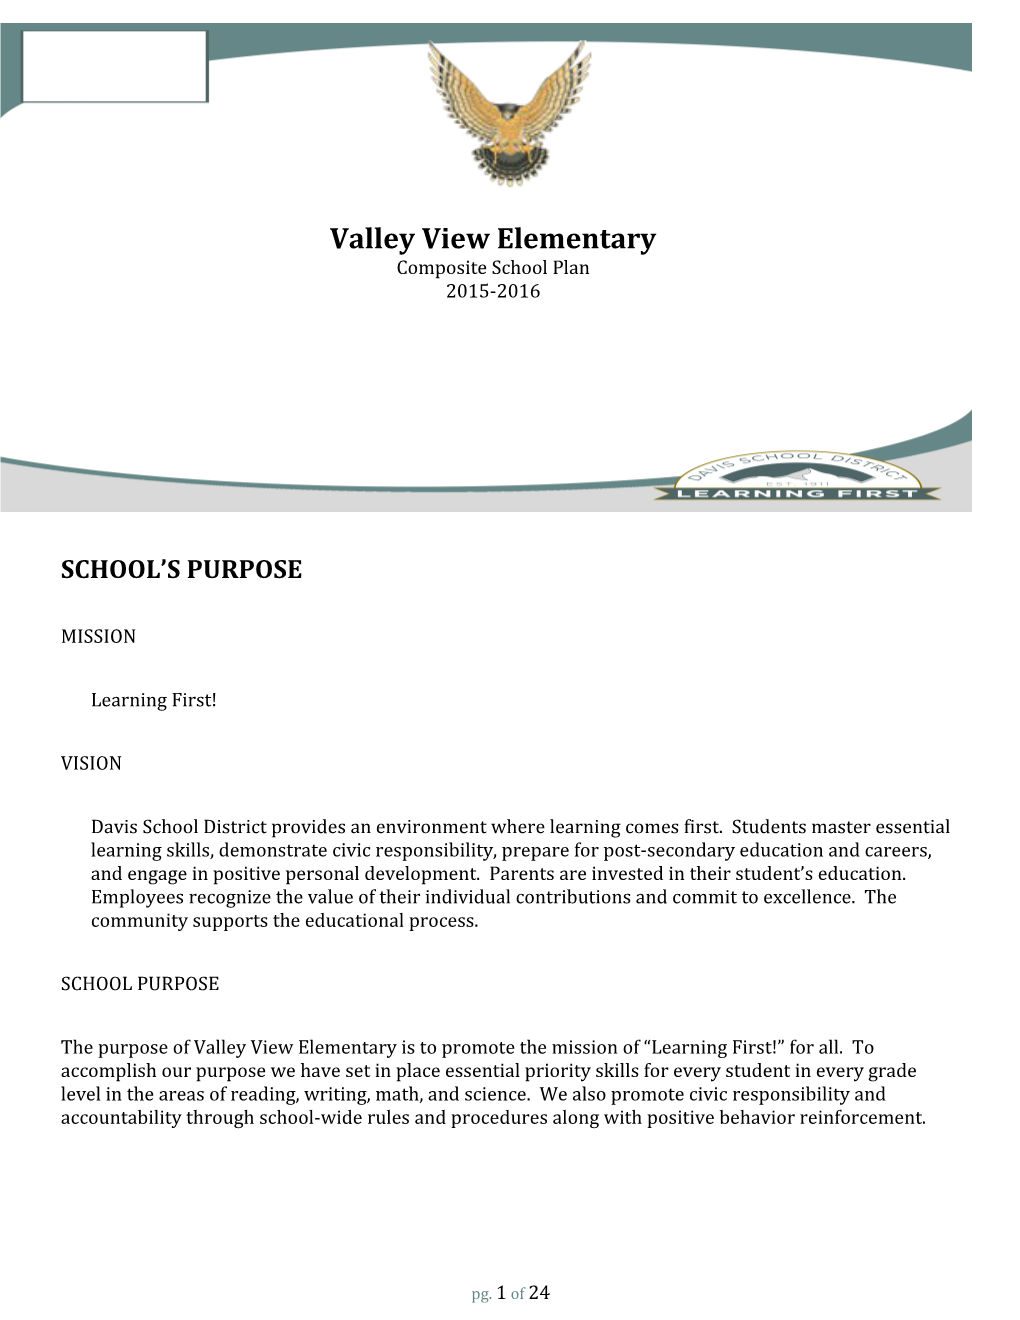 Composite School Plan 2014-2015 Valley View Elementary